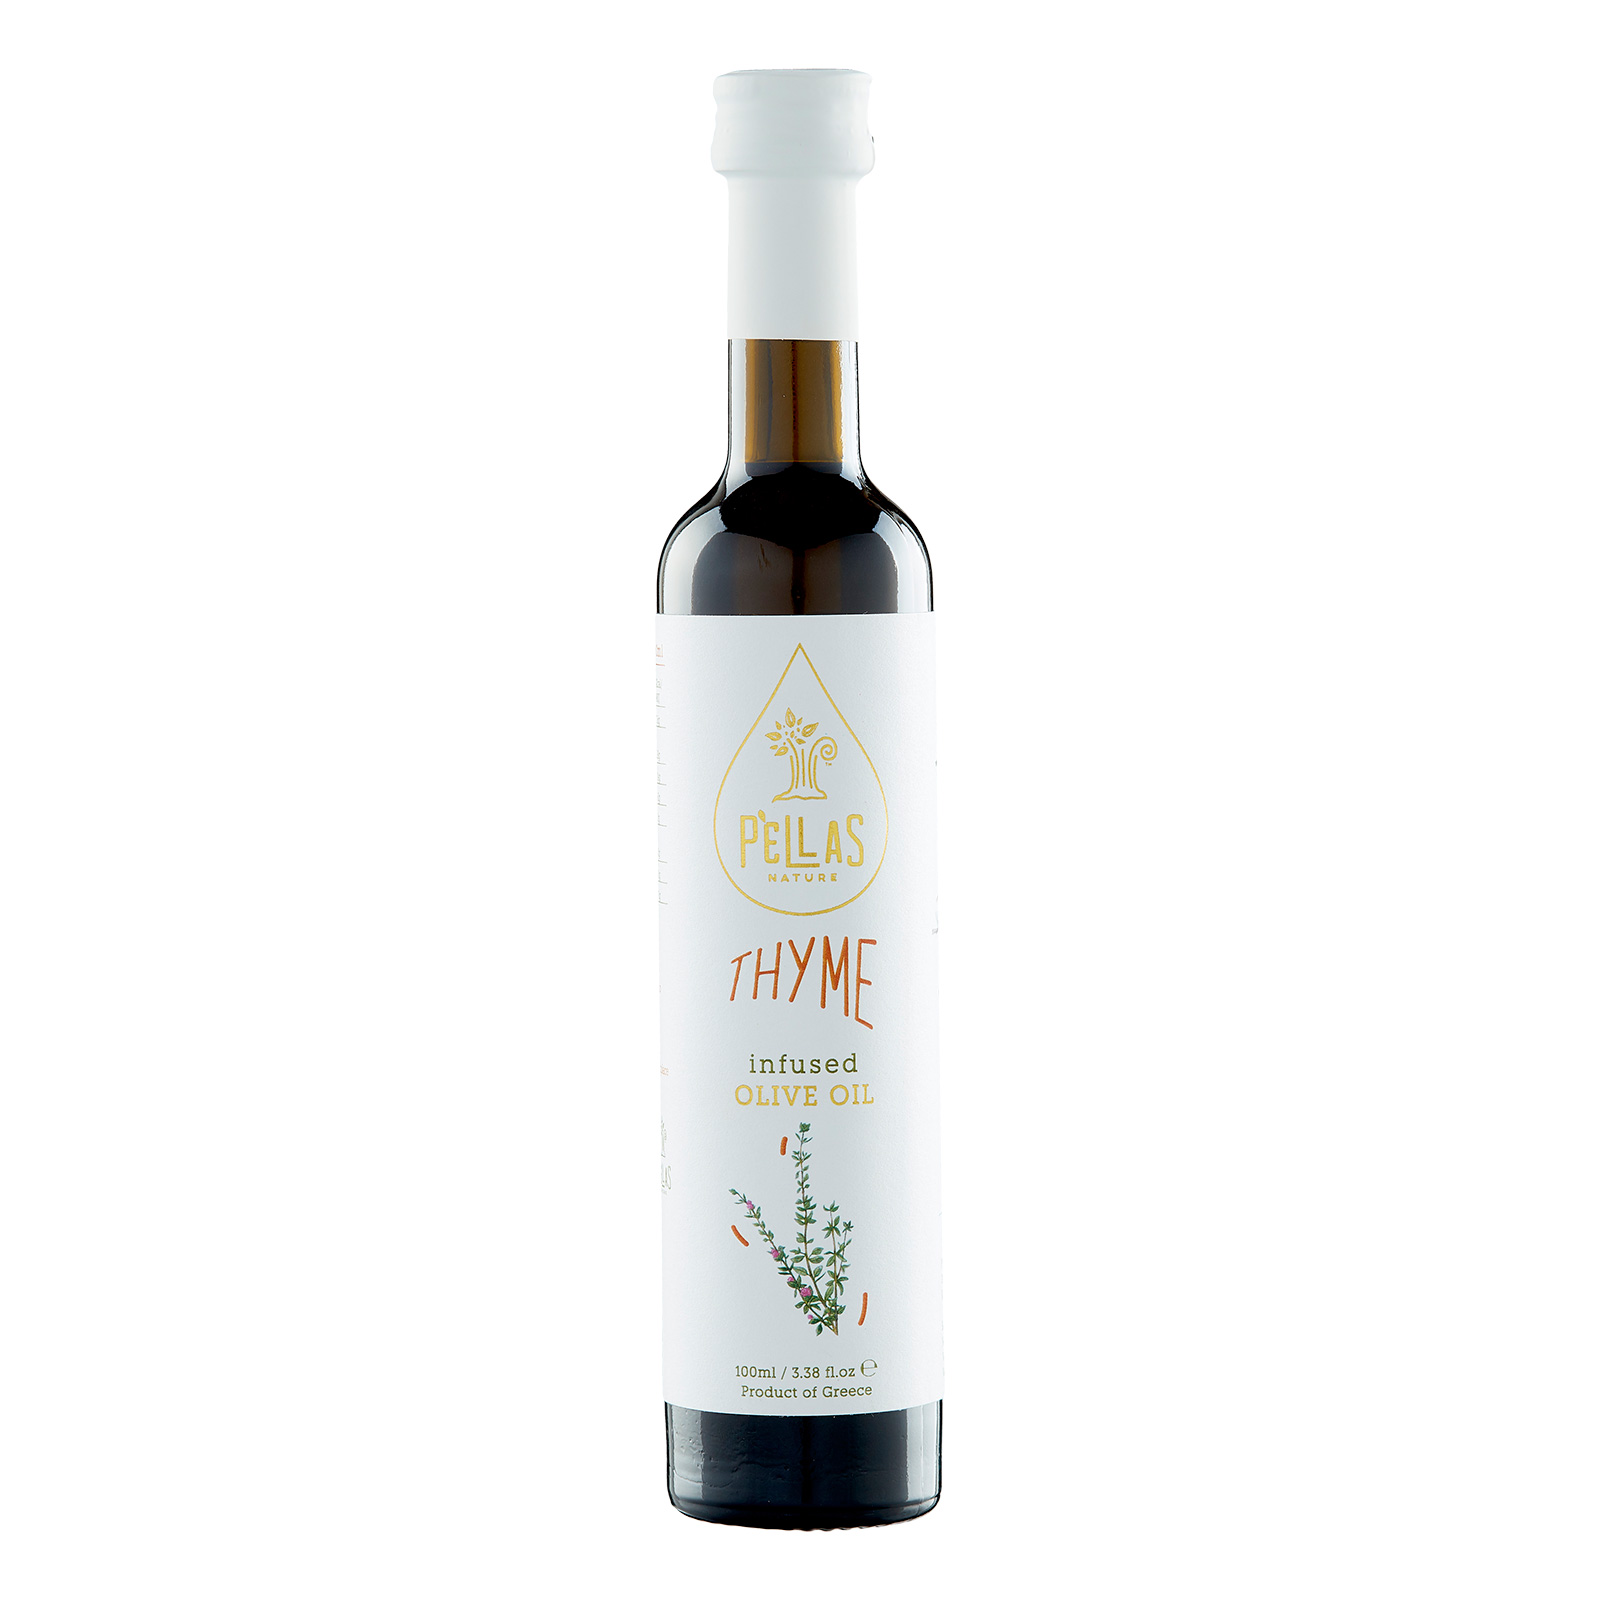 Pellas Nature Thyme infused Extra Virgin Olive Oil 3.38 fl.oz Bottle